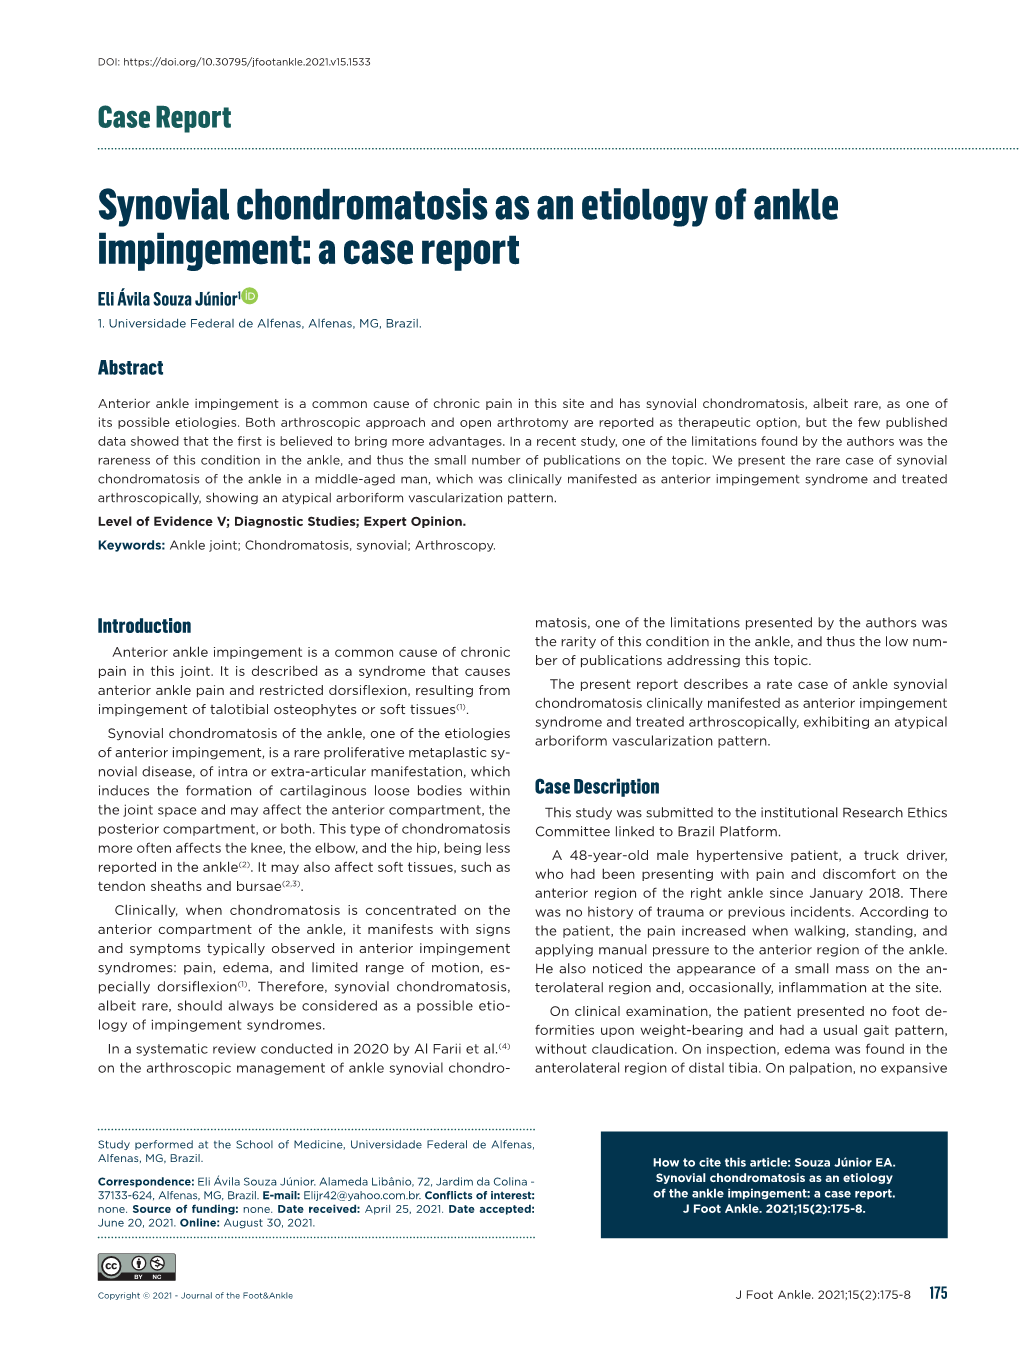 Synovial Chondromatosis As an Etiology of Ankle Impingement: a Case Report Eli Ávila Souza Júnior1 1